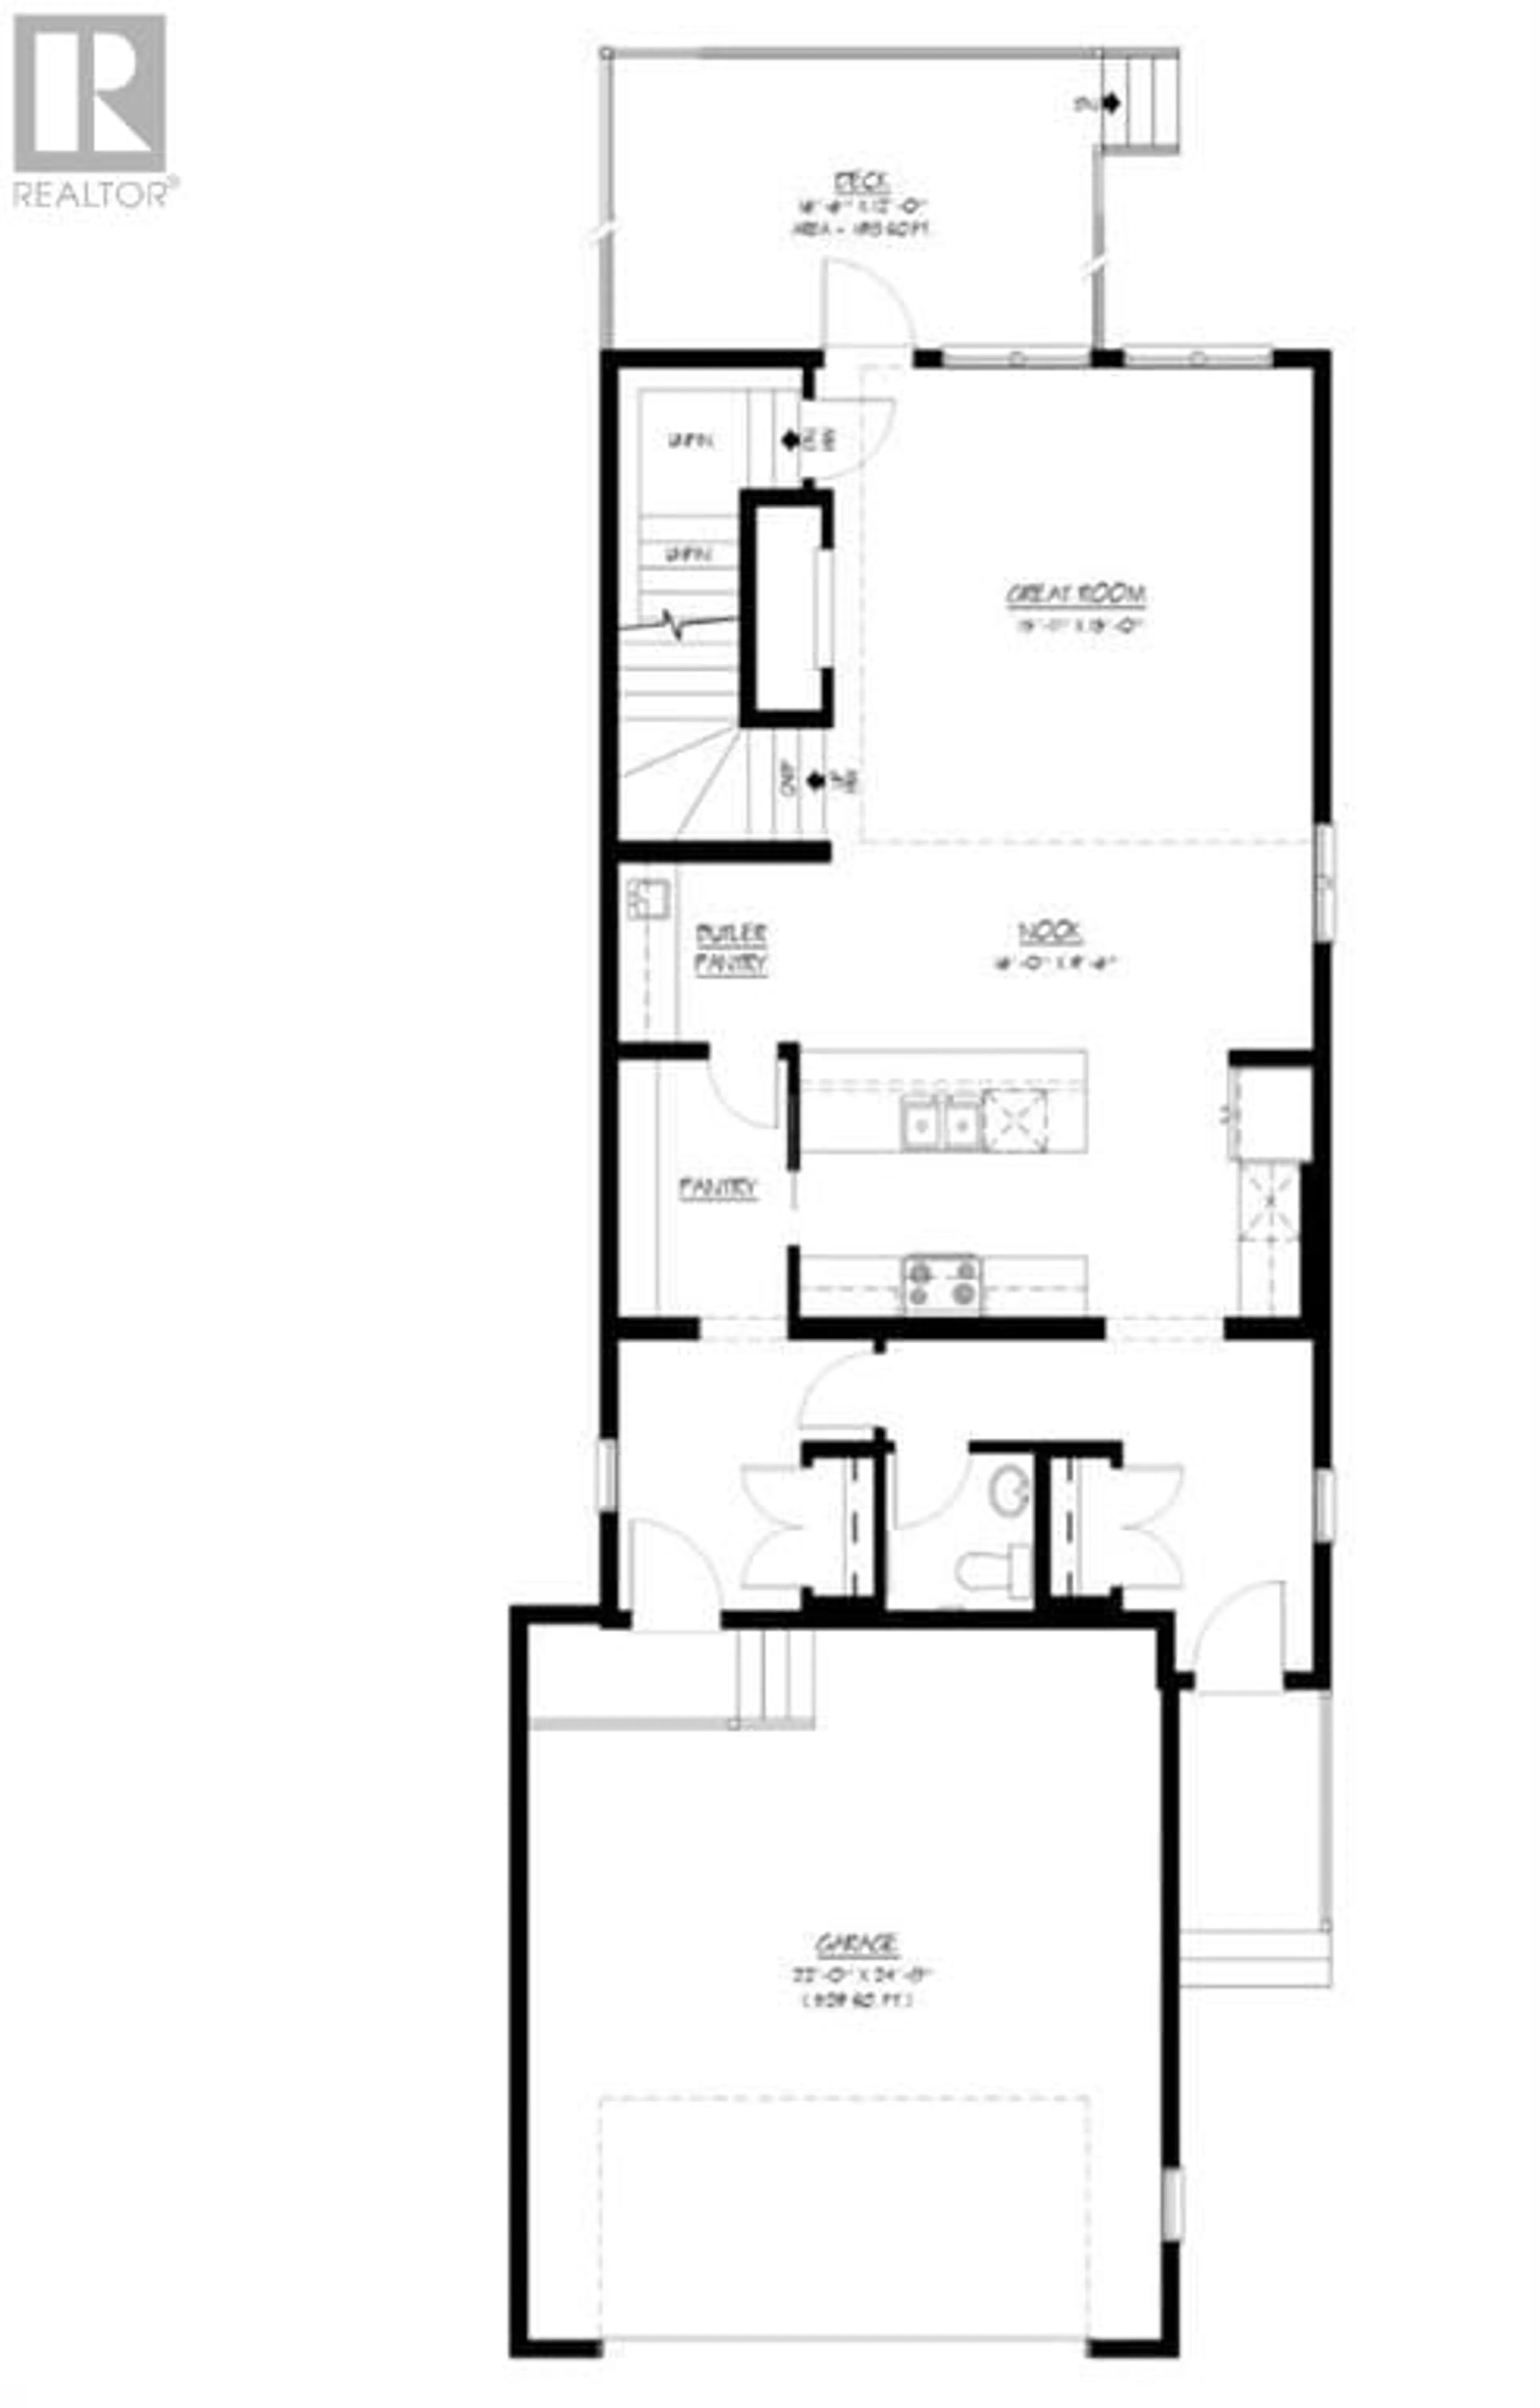 Floor plan for 62 Larkspur Bend, Okotoks Alberta T1S3K7